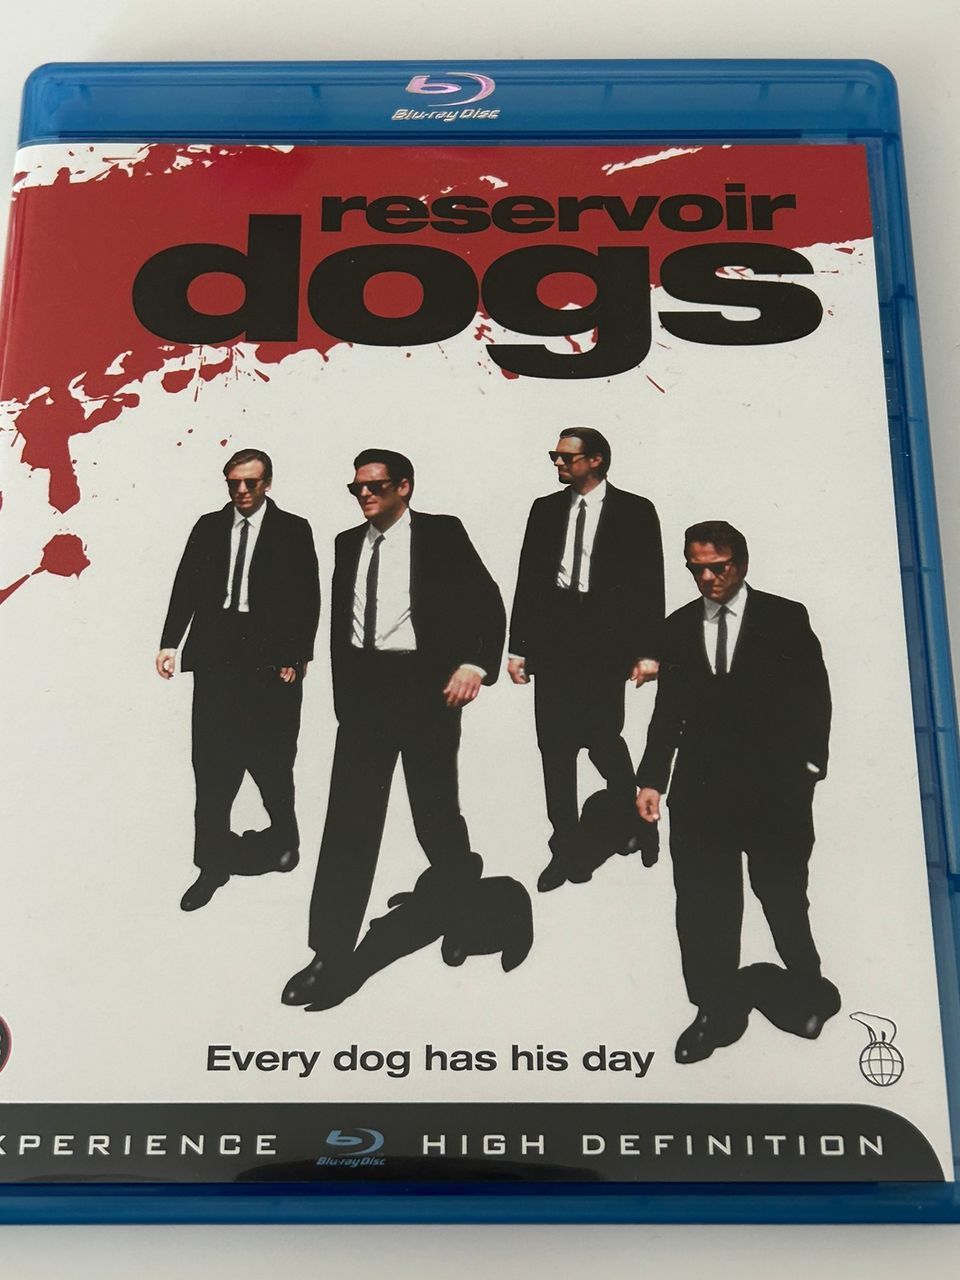 Reservoir dogs blu-ray